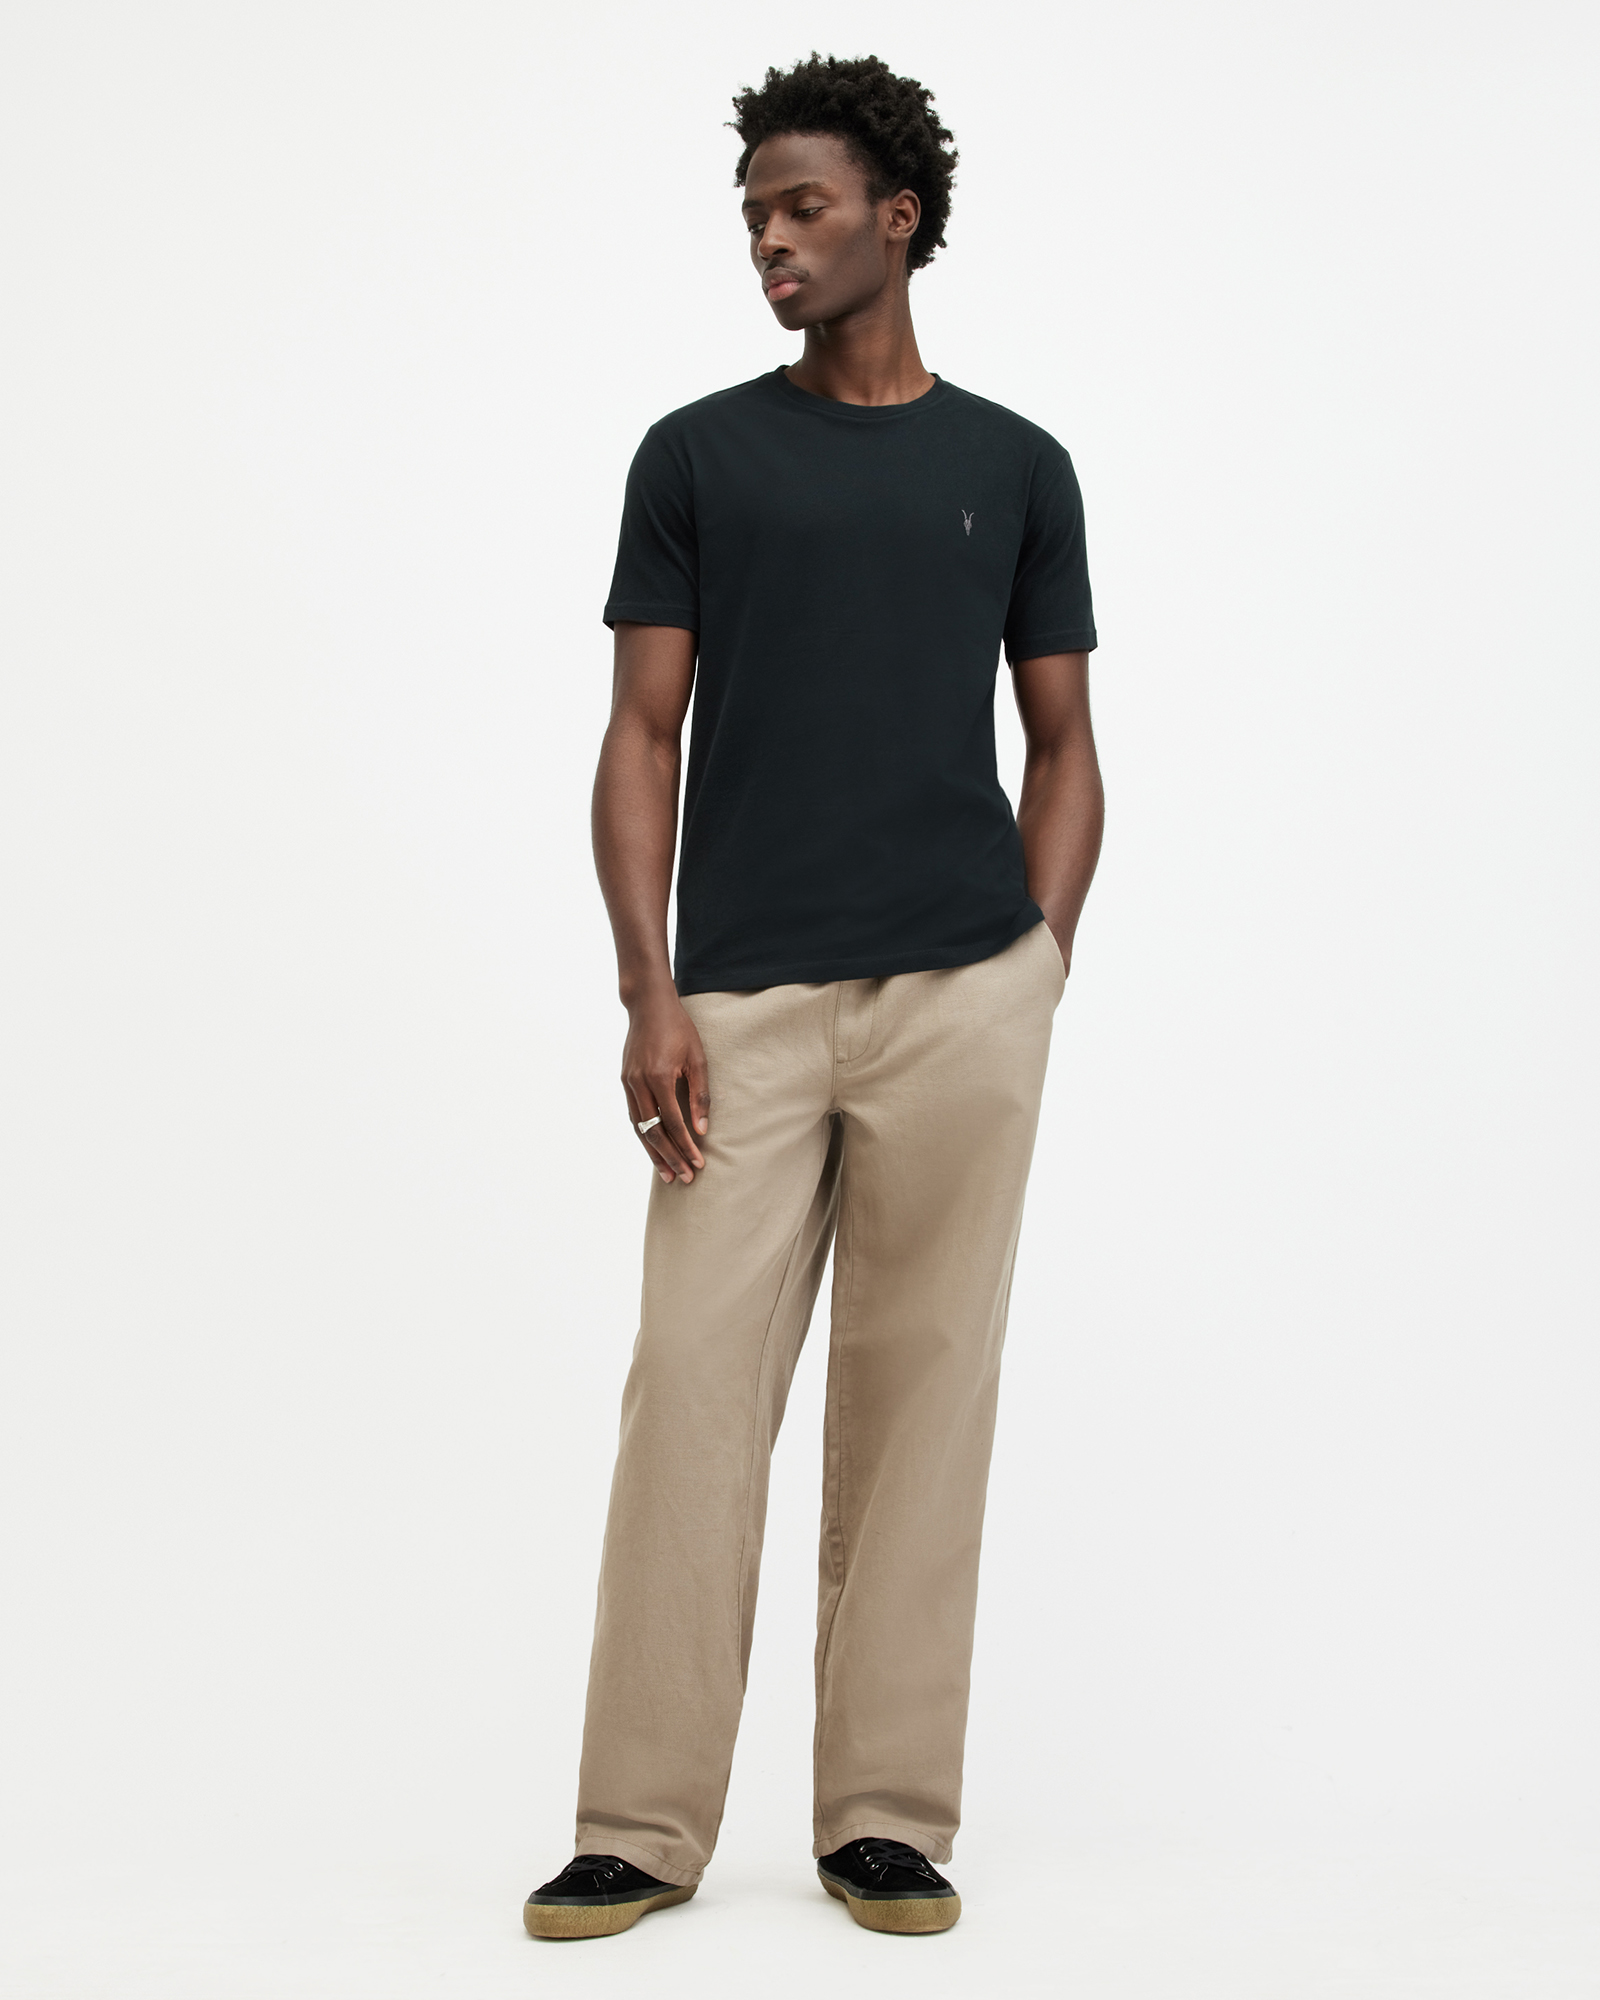 AllSaints Size: M Men's Regular Fit Brace Tonic Short Sleeve Crew T-Shirt, Black